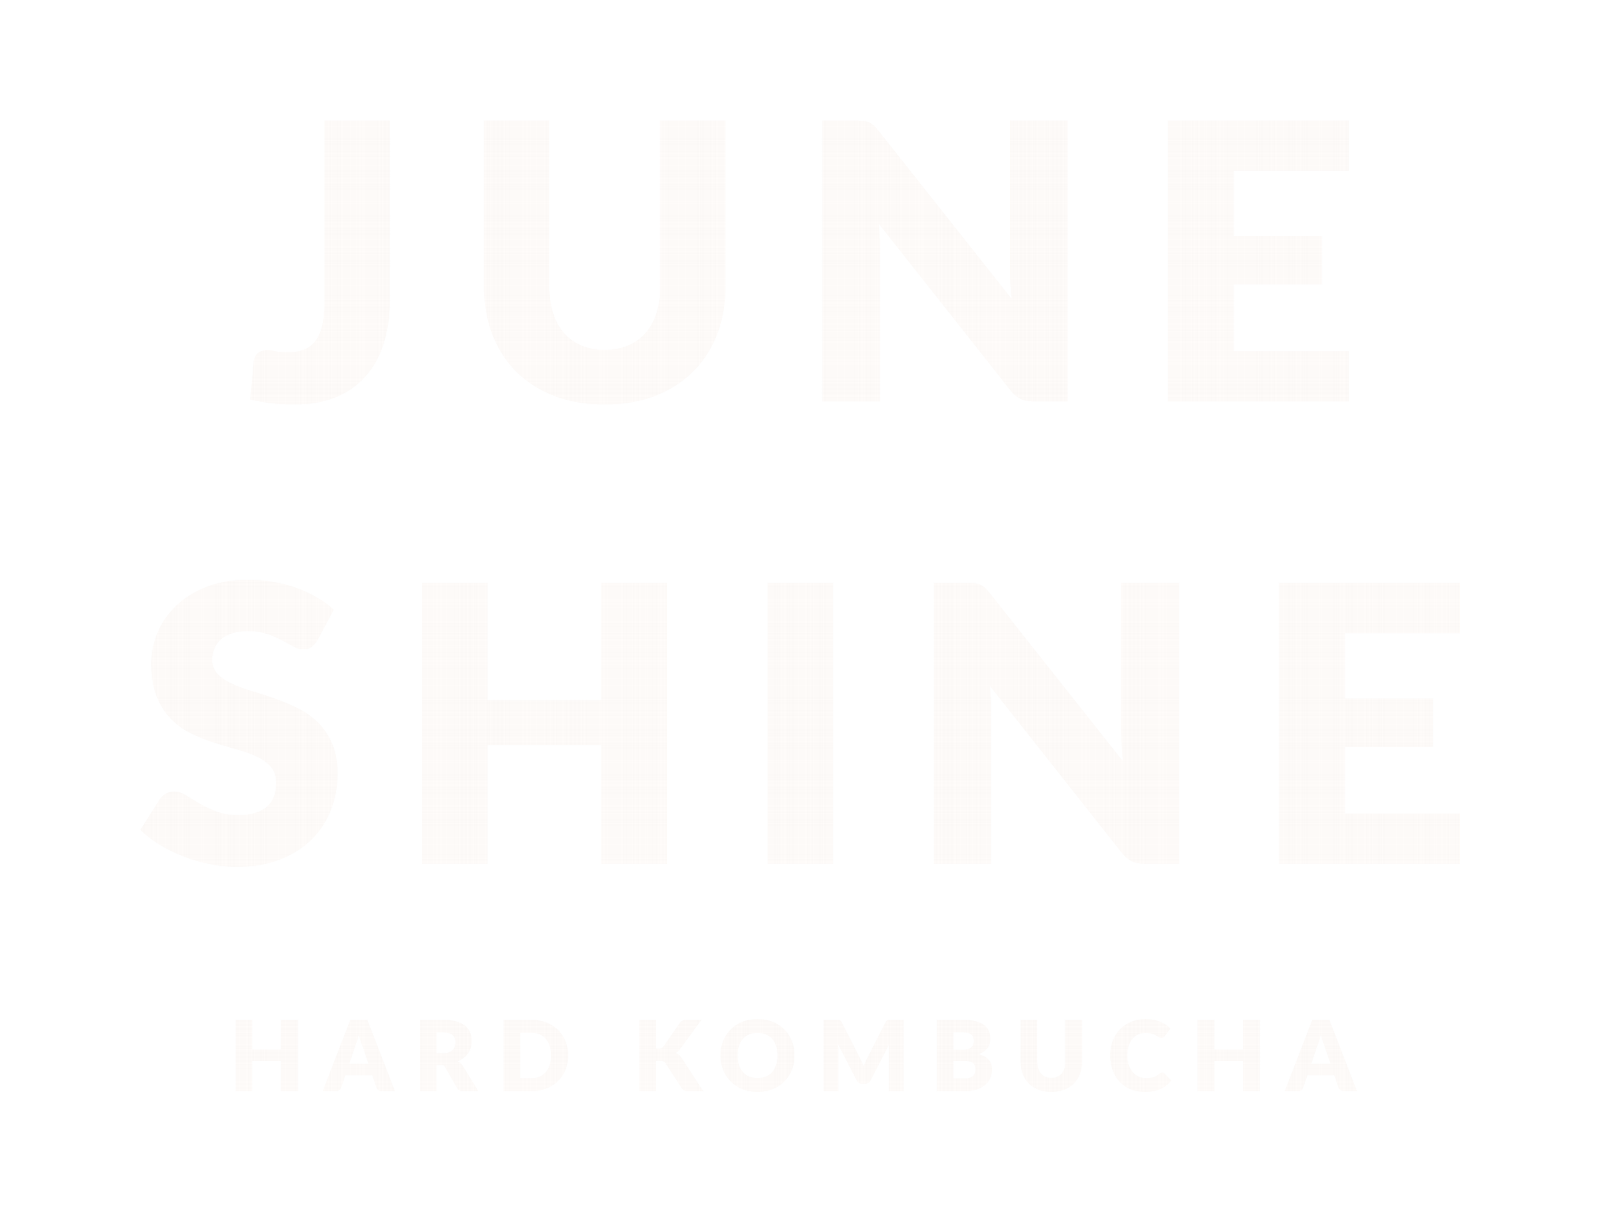 June Shine logo